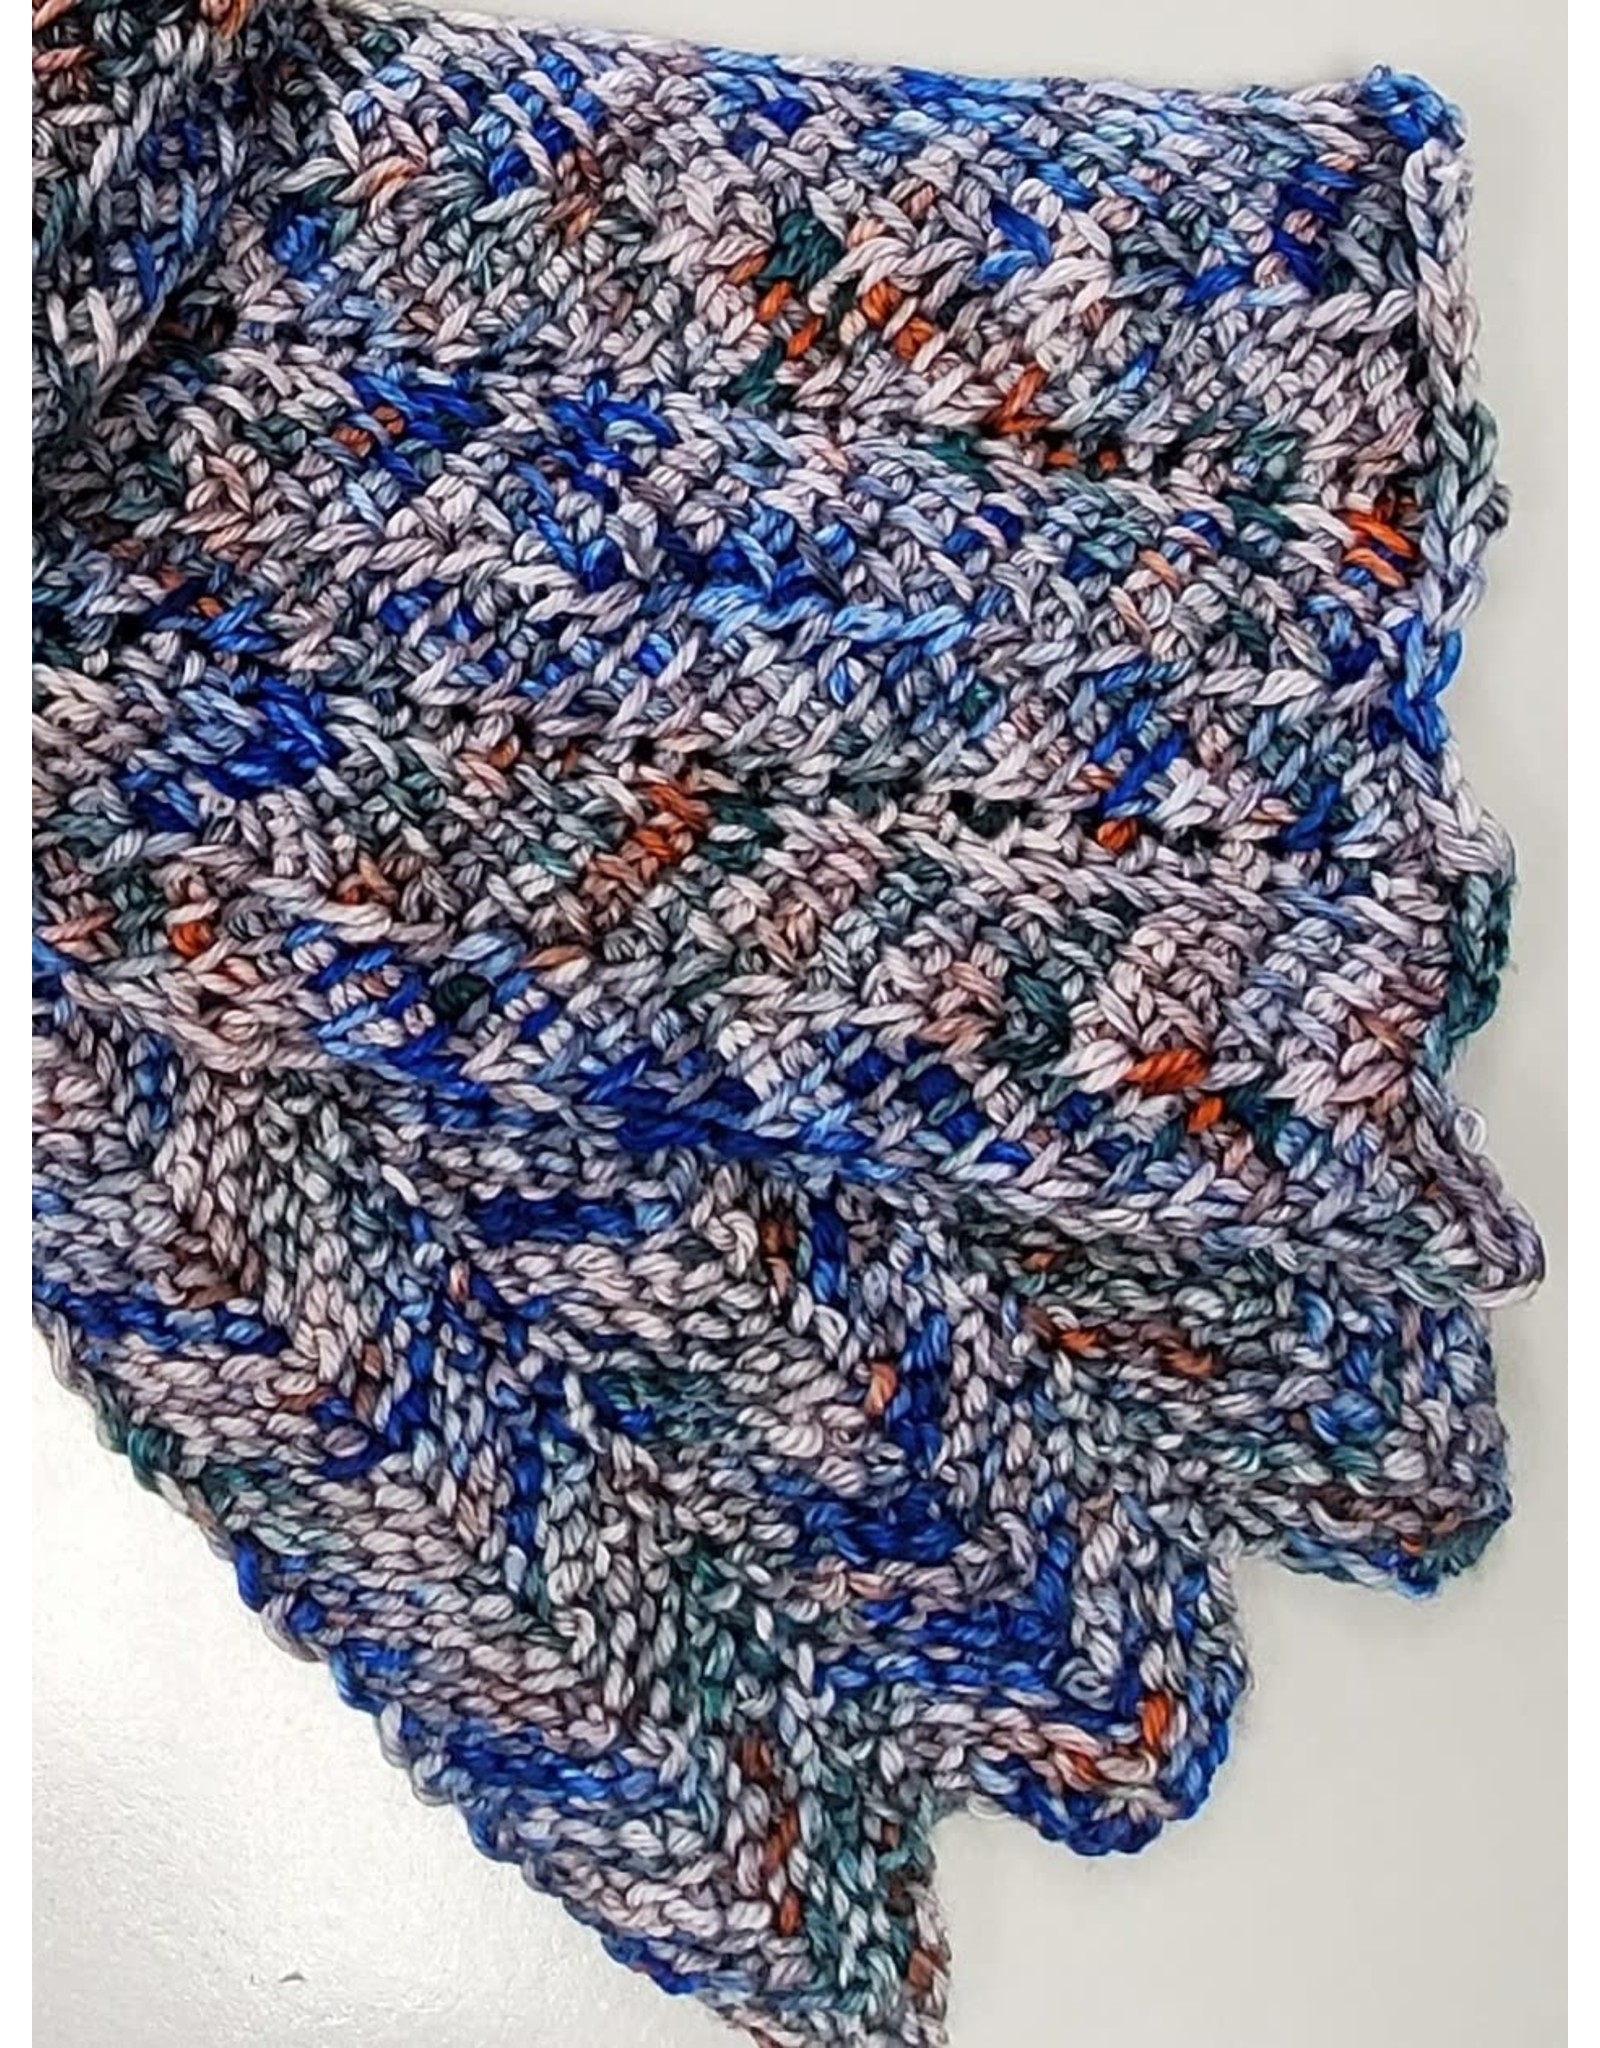 Advanced Crochet: Tunisian Ripple Scarf, - May 18th & 25th (6:30-8:30 pm)